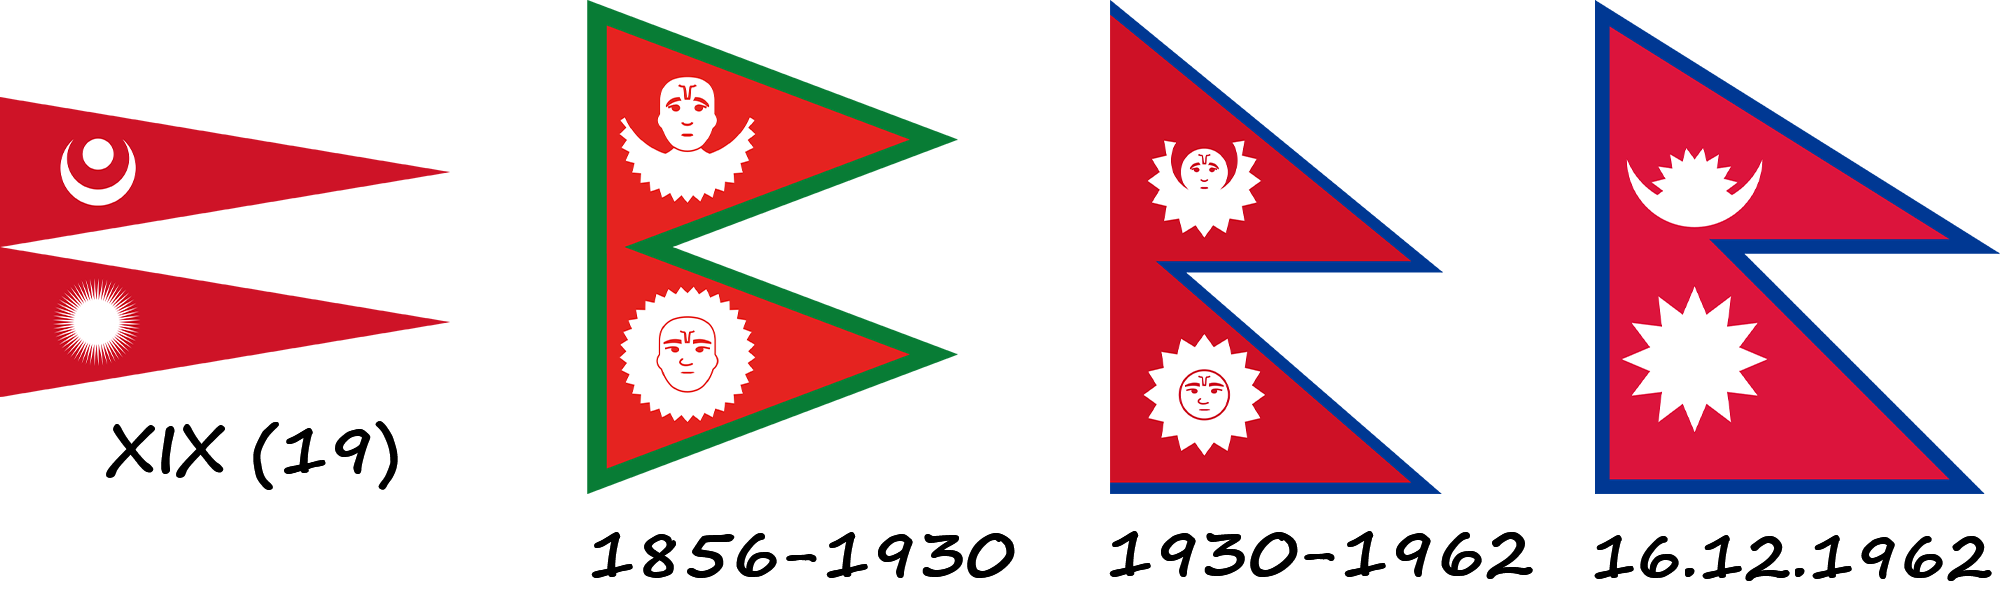 Historia de la bandera de Nepal